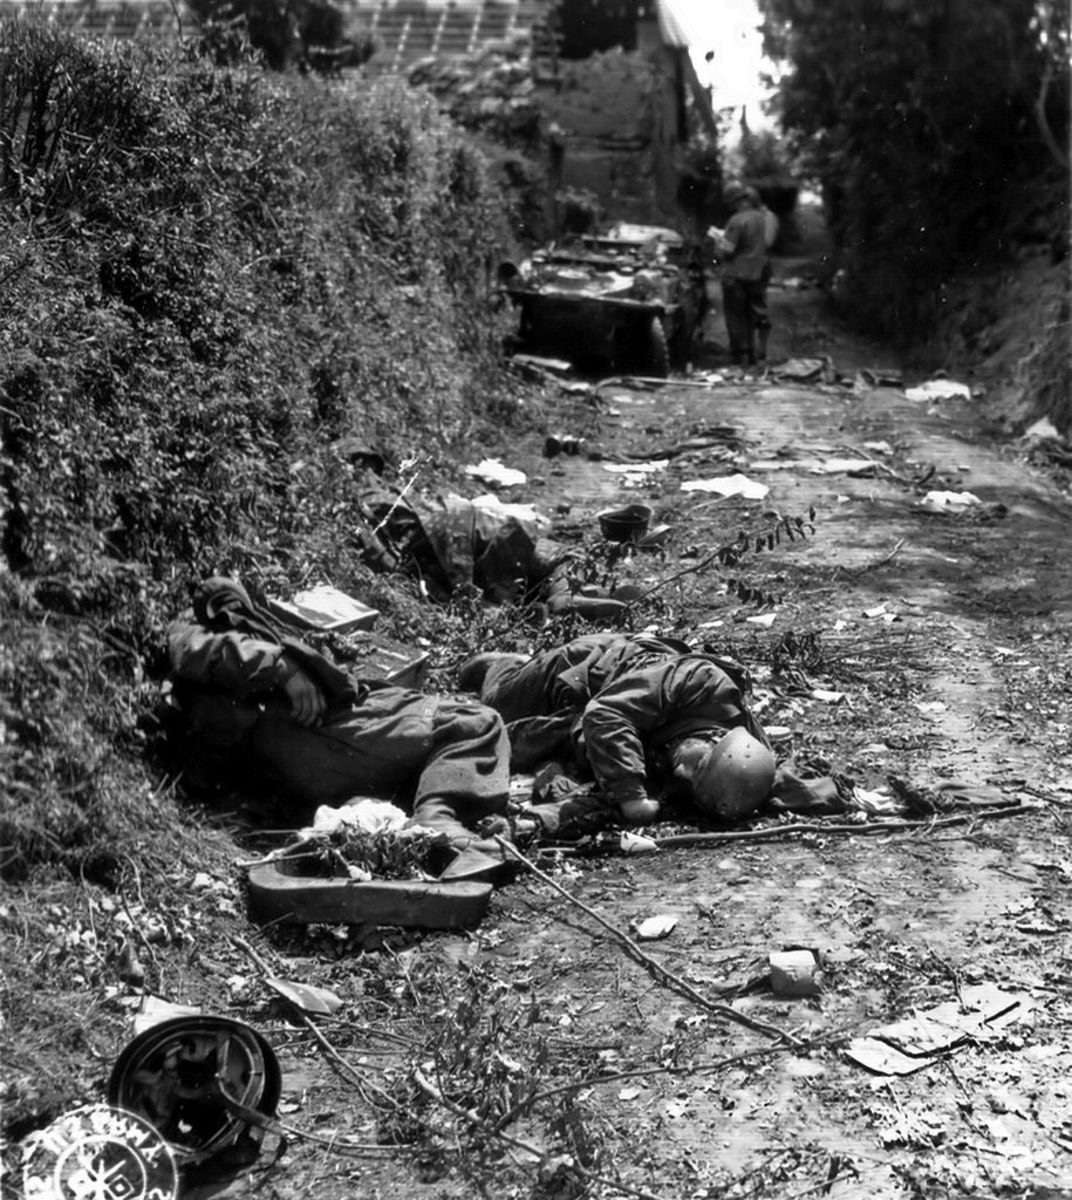 Dead German soldiers on a rural road.